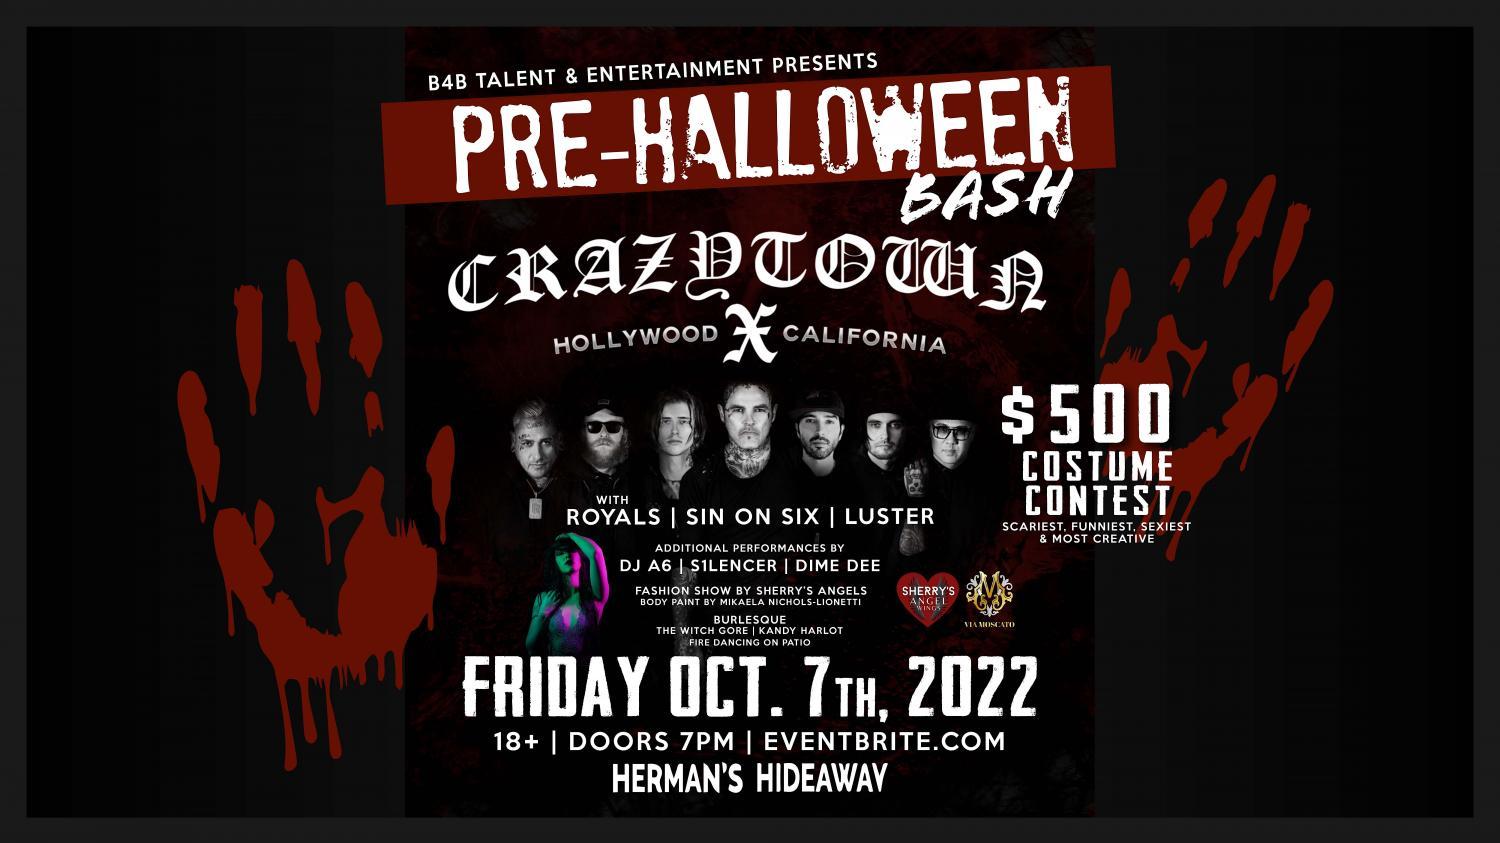 Crazy Town's- Pre Halloween Party:
Fri Oct 7, 7:00 PM - Fri Oct 7, 11:59 PM